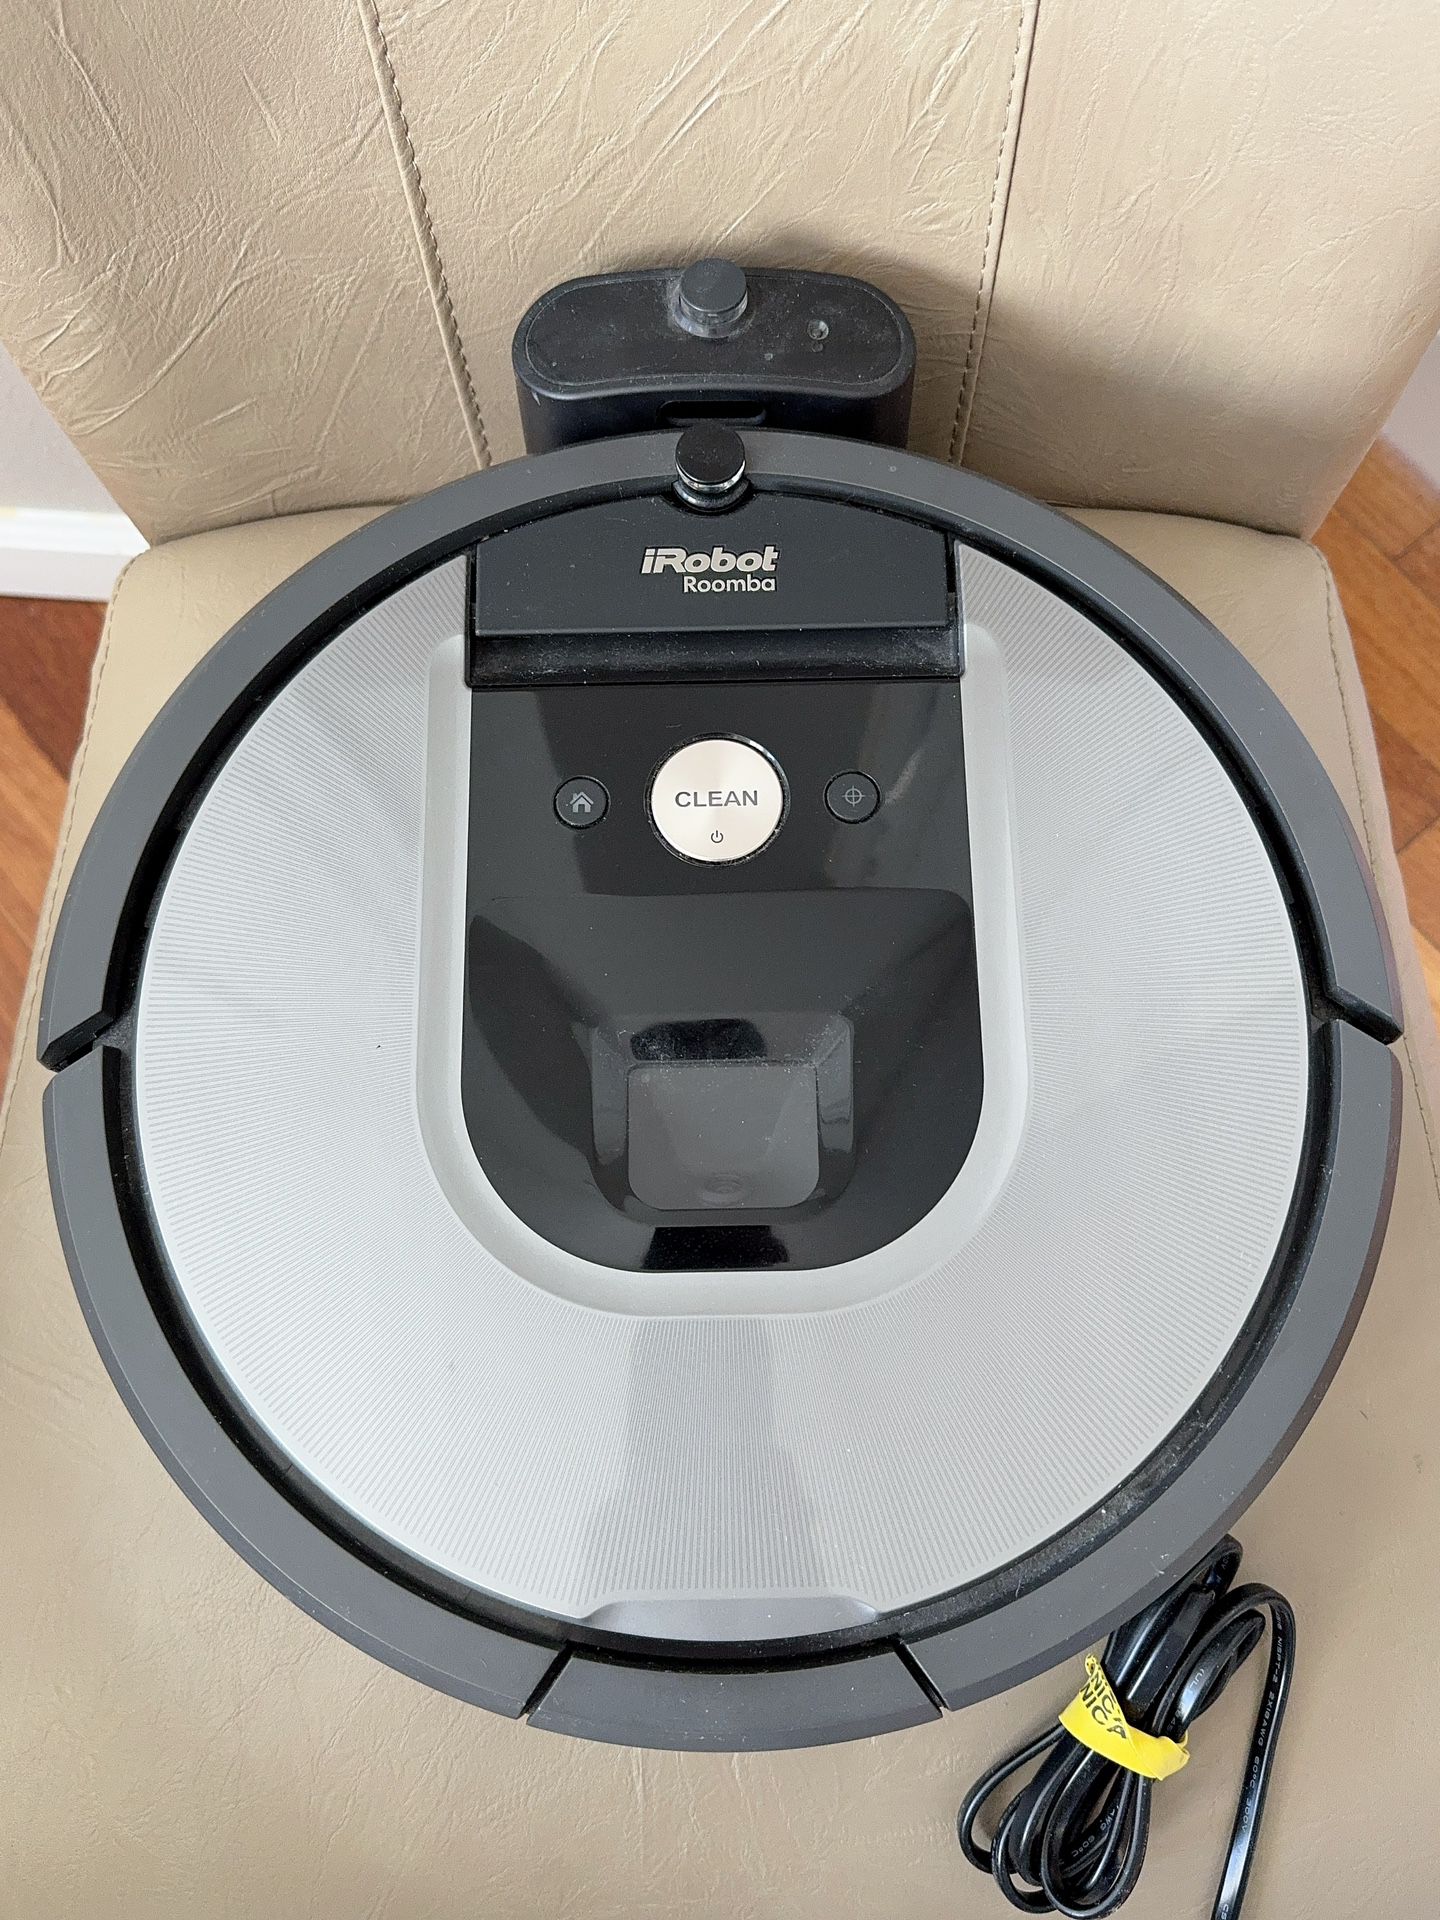 IRobot Roomba Robot Vacuum-Wi-Fi Connectivity 